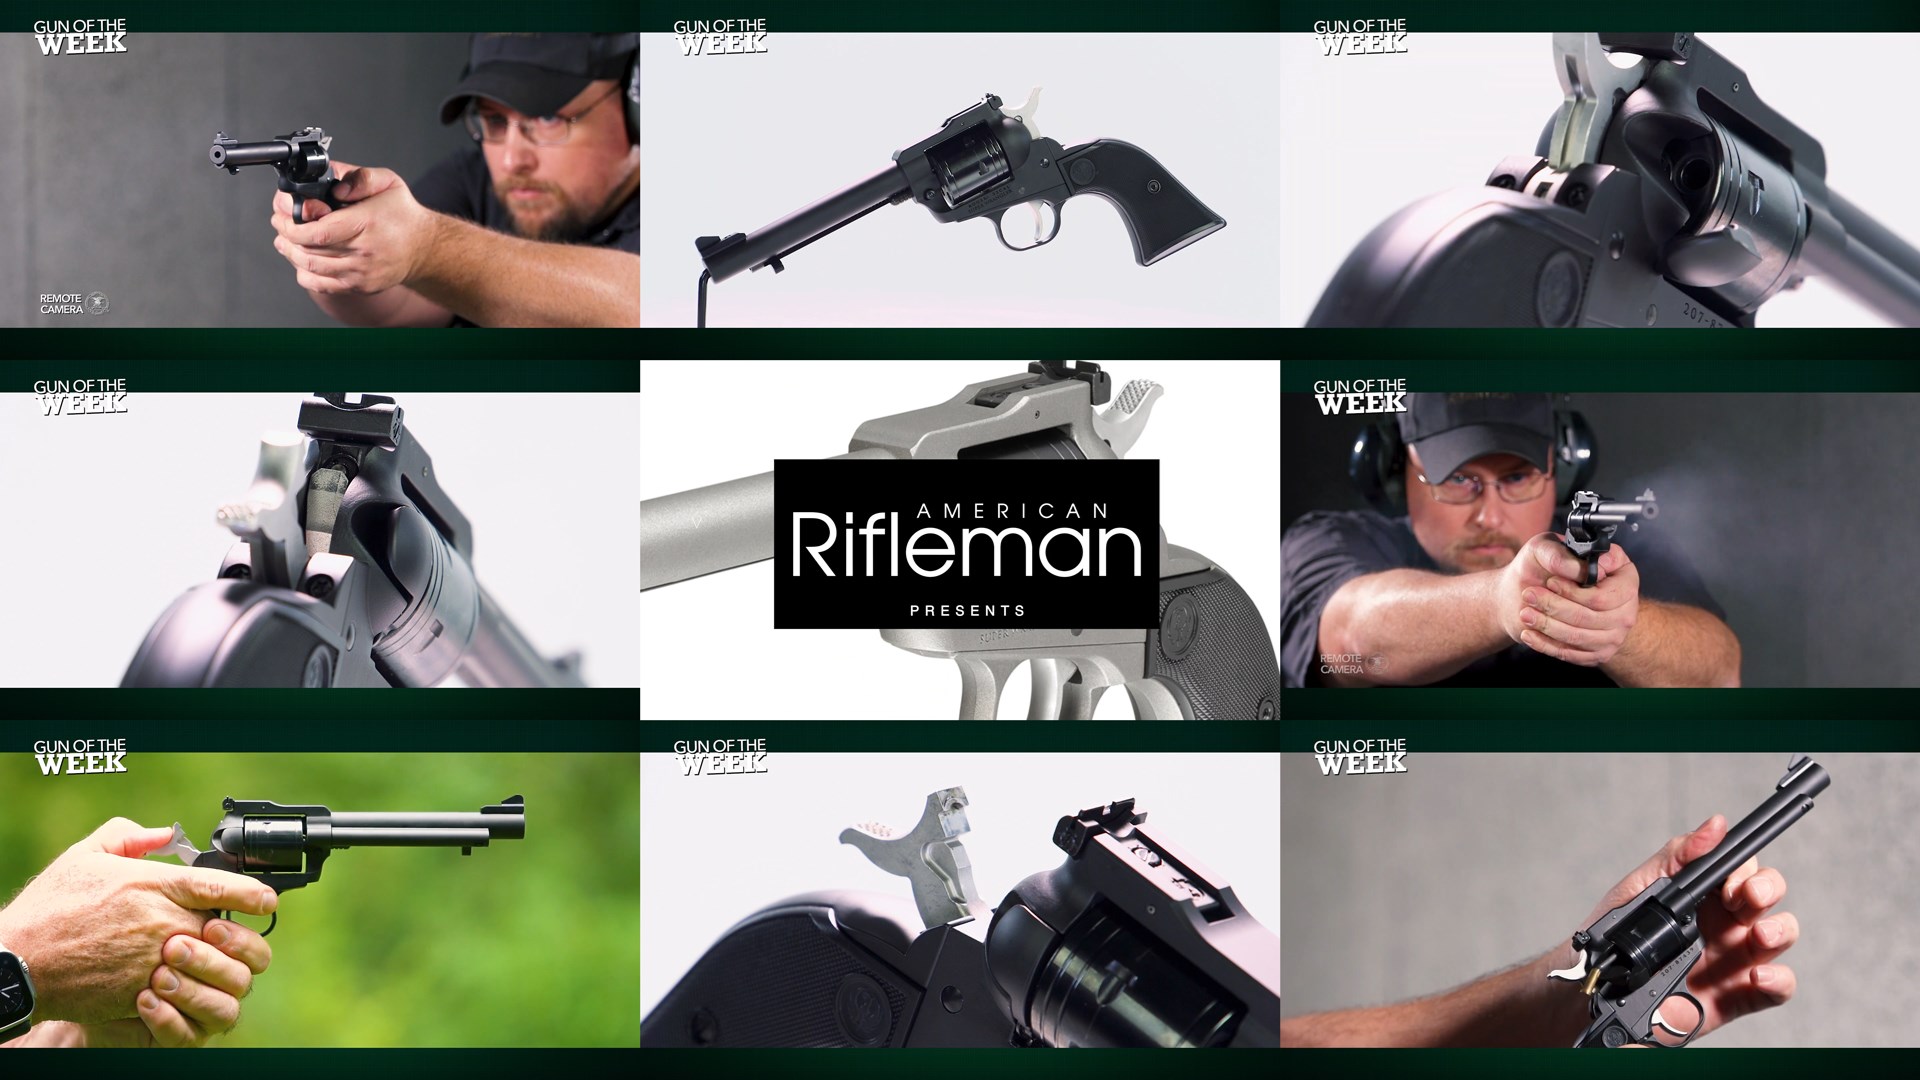 Ruger Super Wrangler Gun Of The Week video screenshot tiles arrangement revolver man shooting